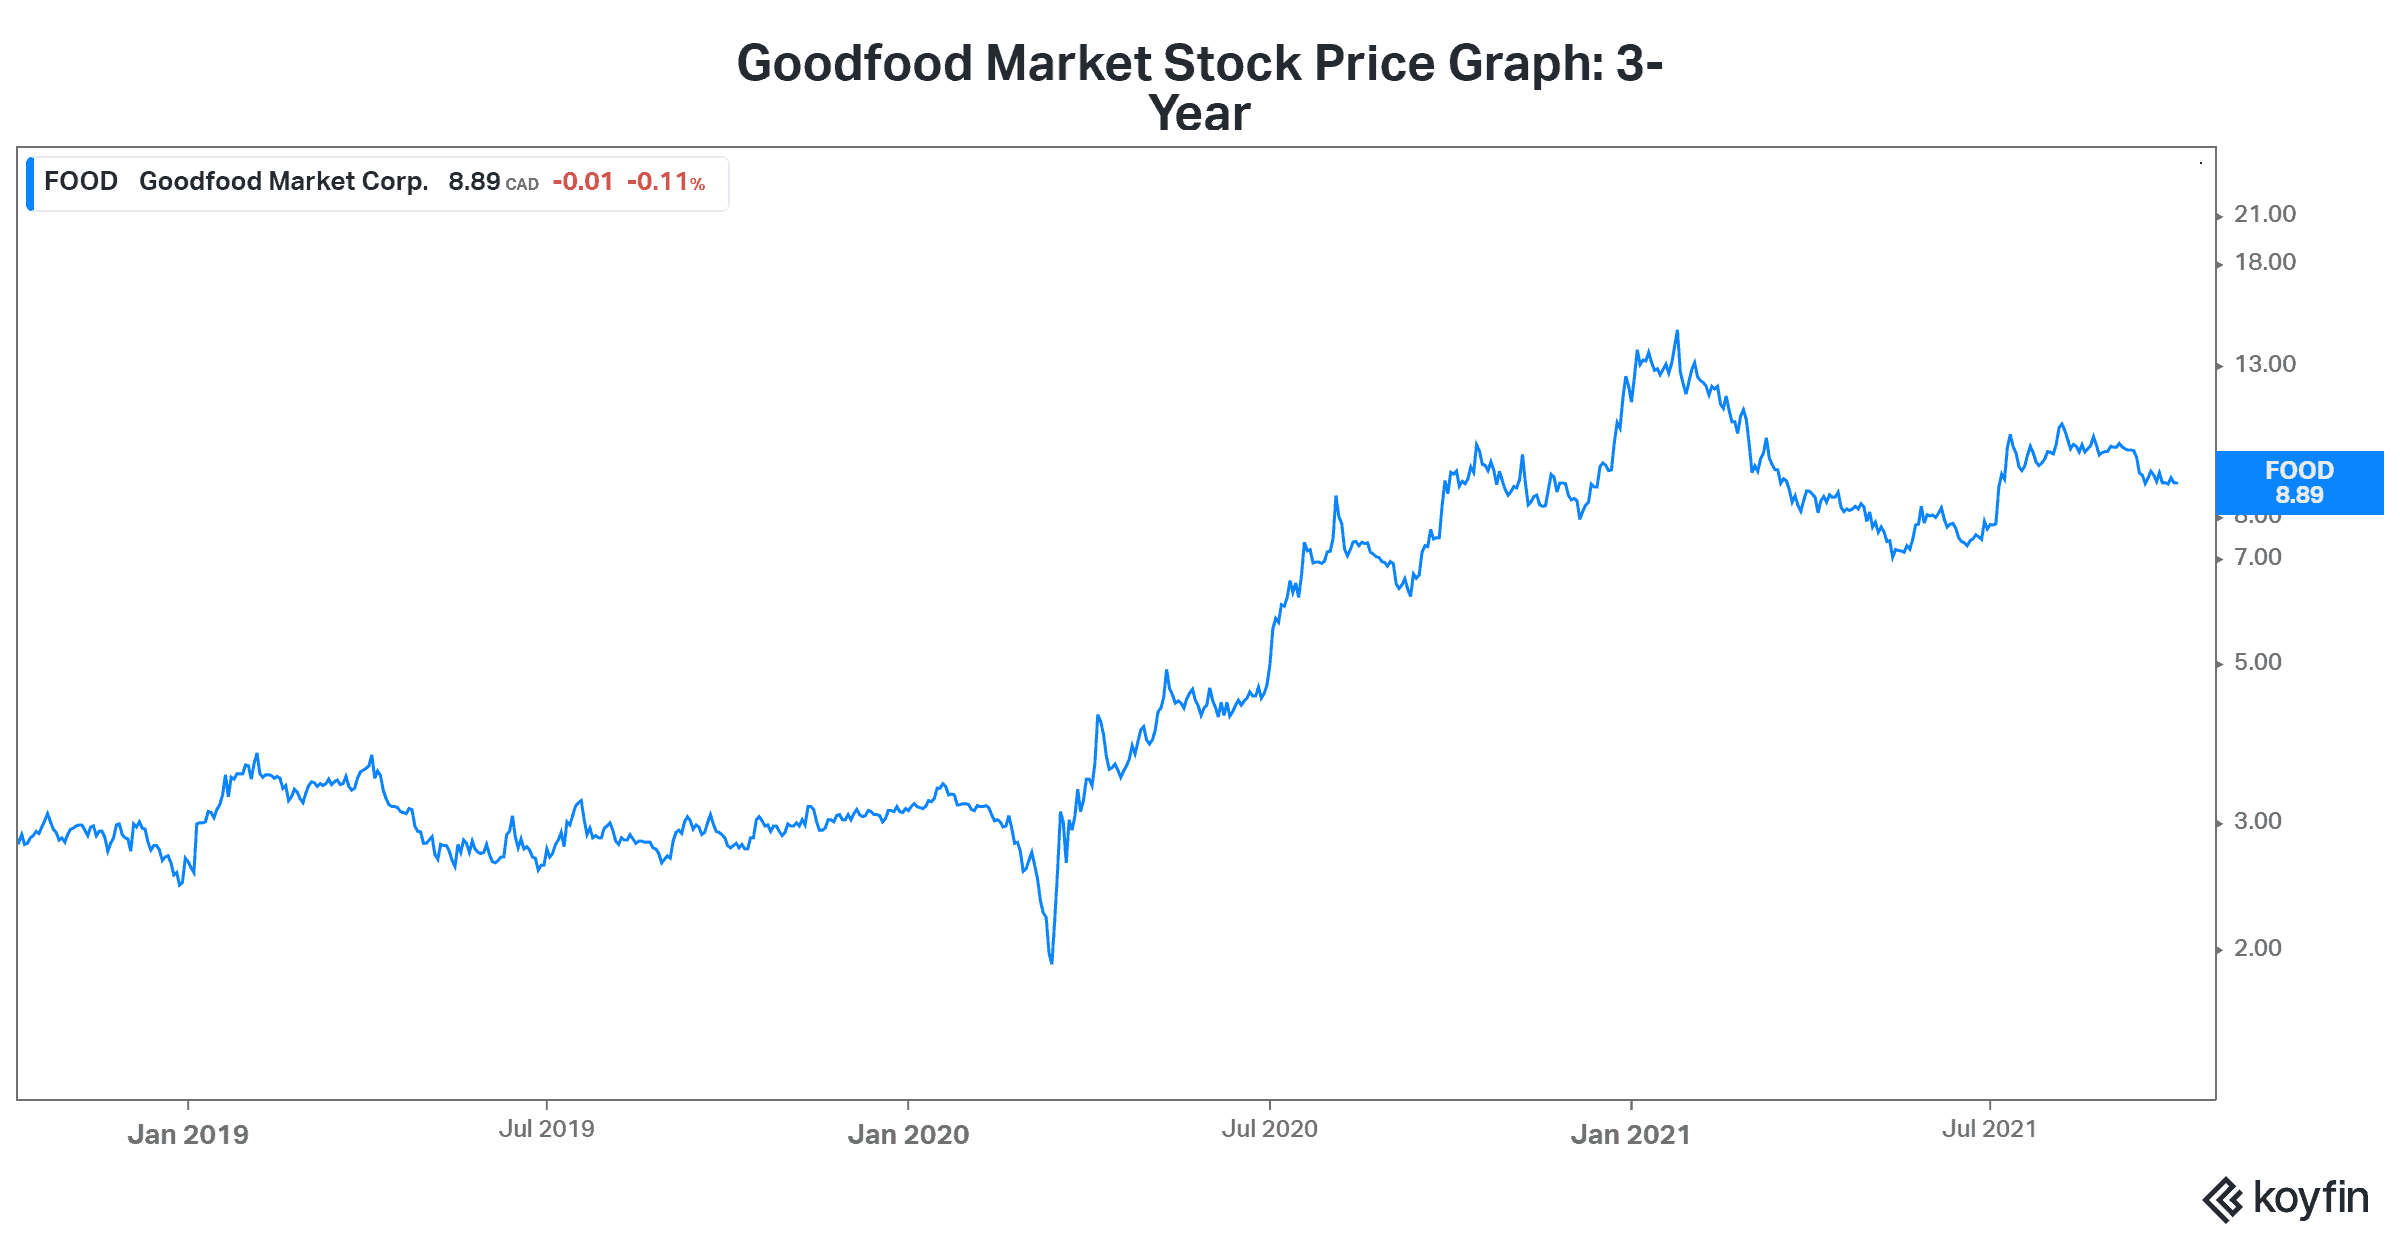 Goodfood market stock price